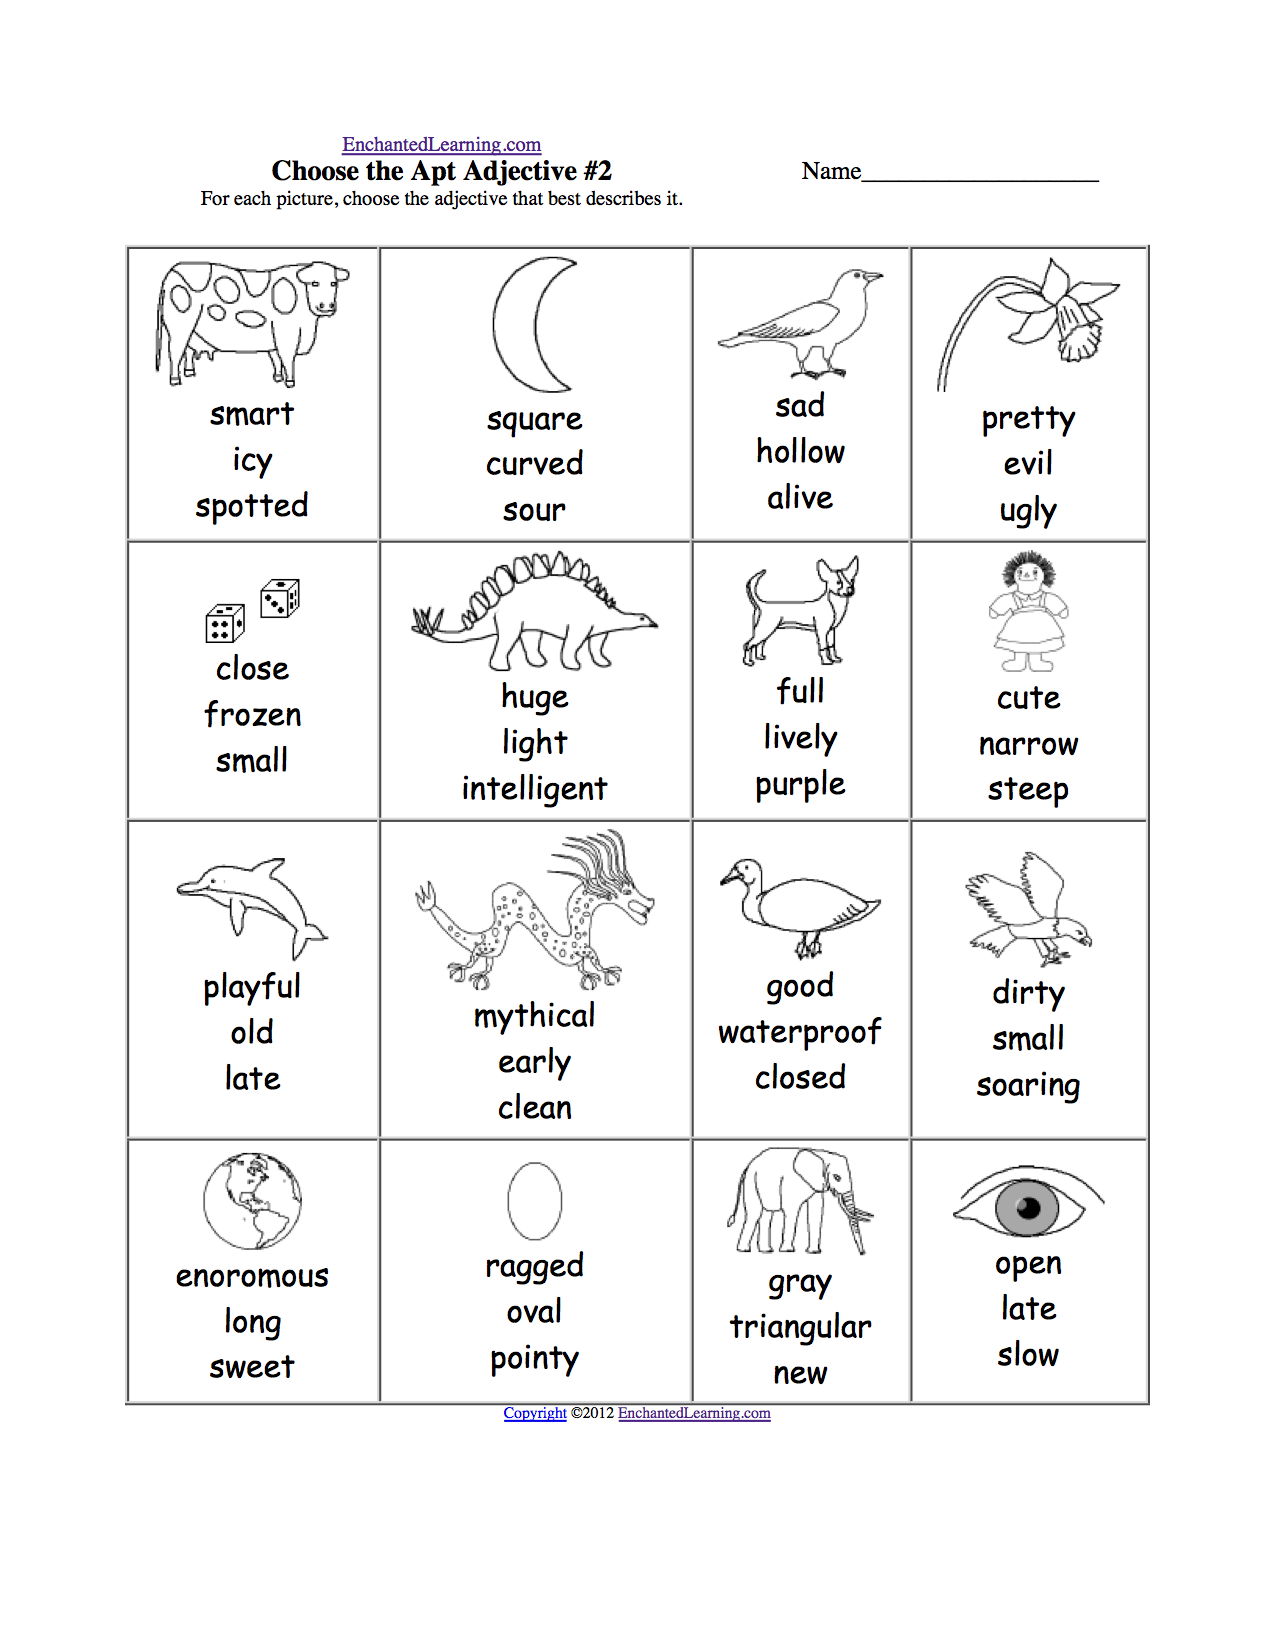 adjectives-vocabulary-word-list-enchantedlearning